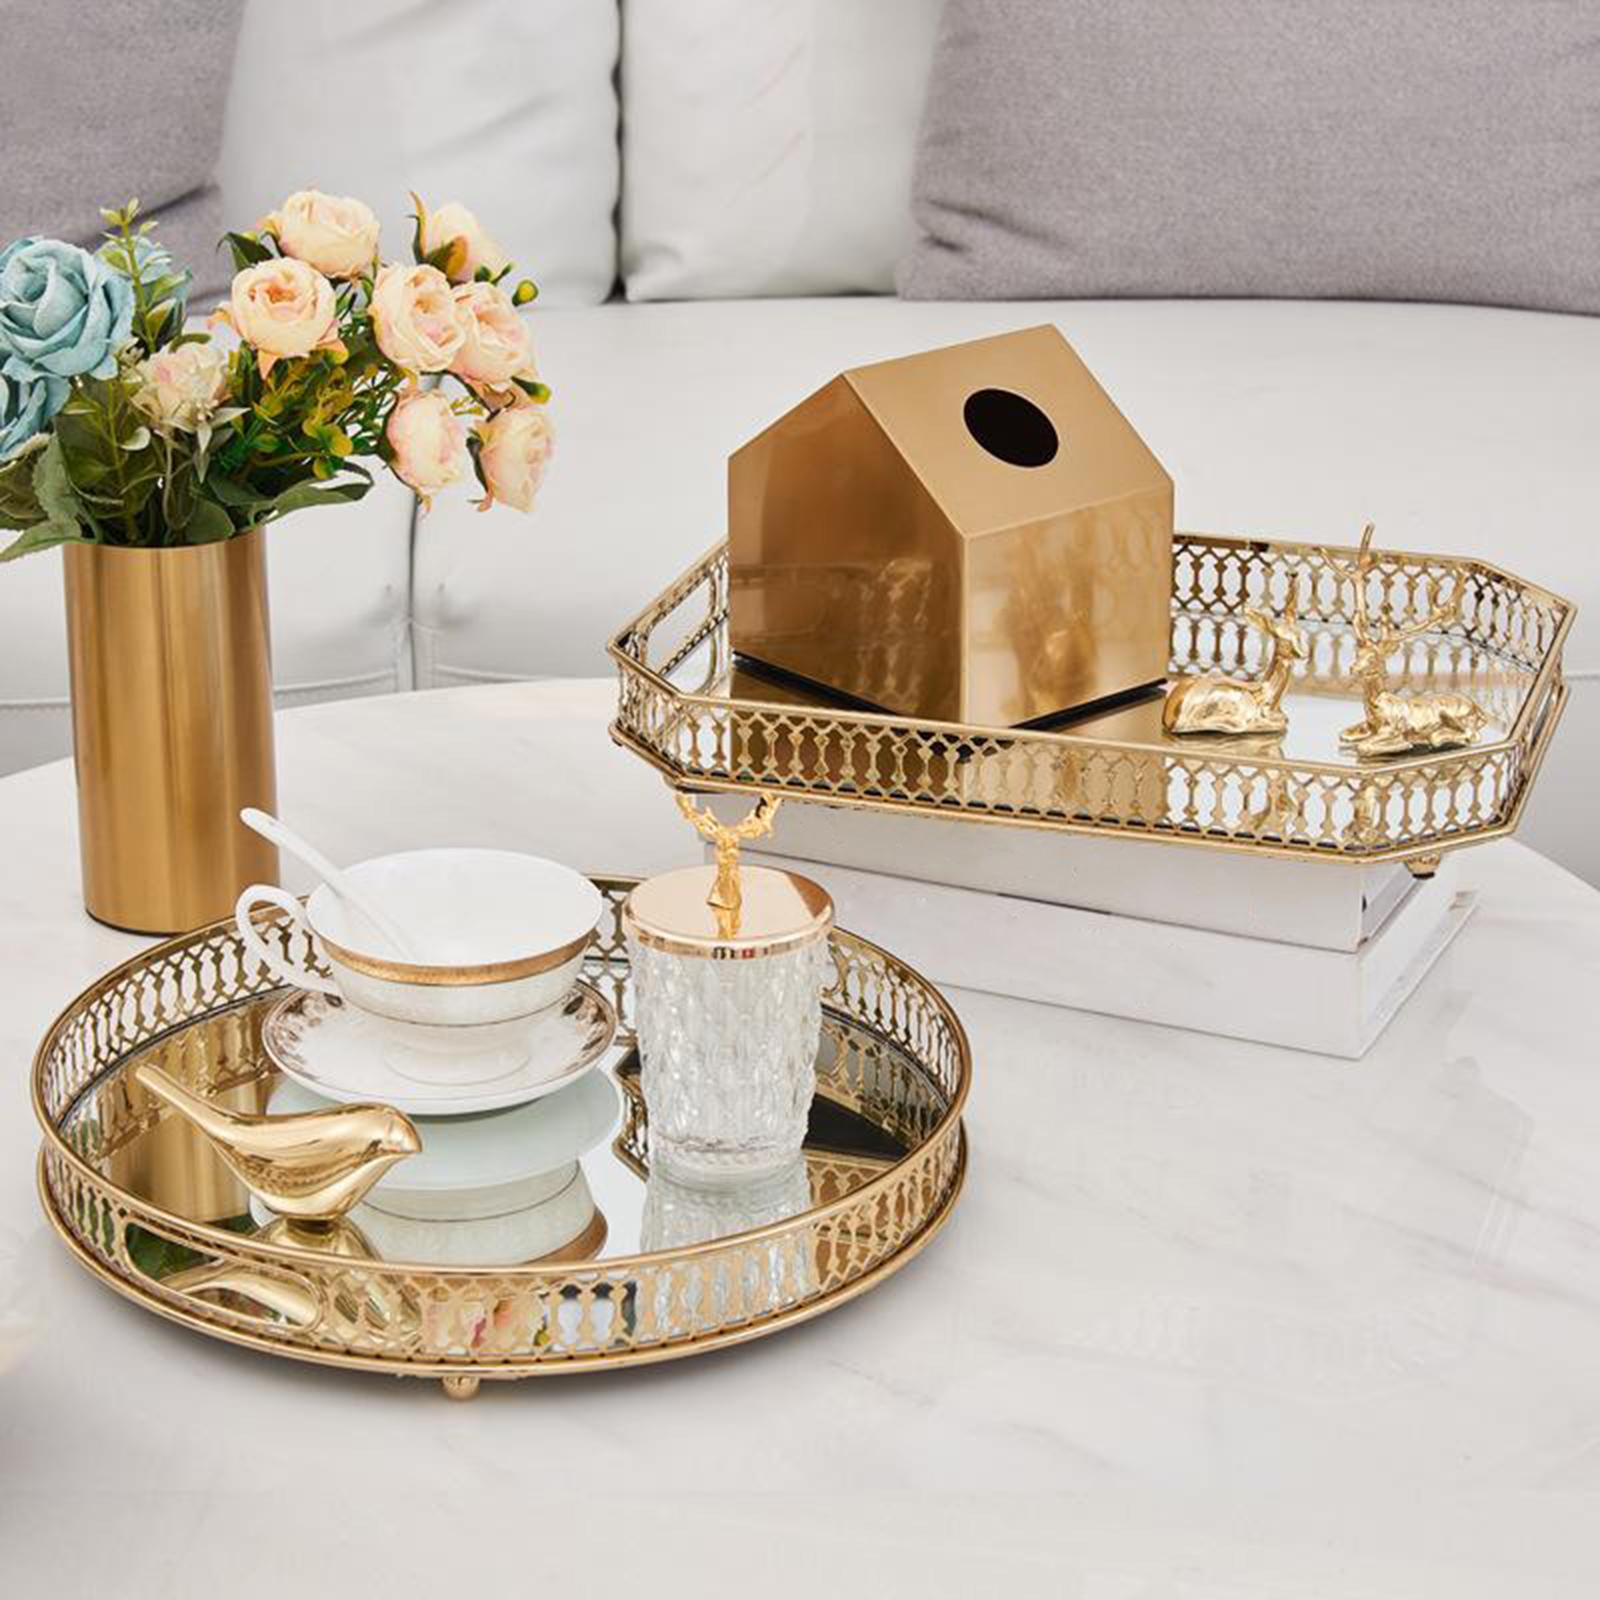 2xCrystal Tray Decorative Organizer Dessert Plate Home Decor Rectangle Home